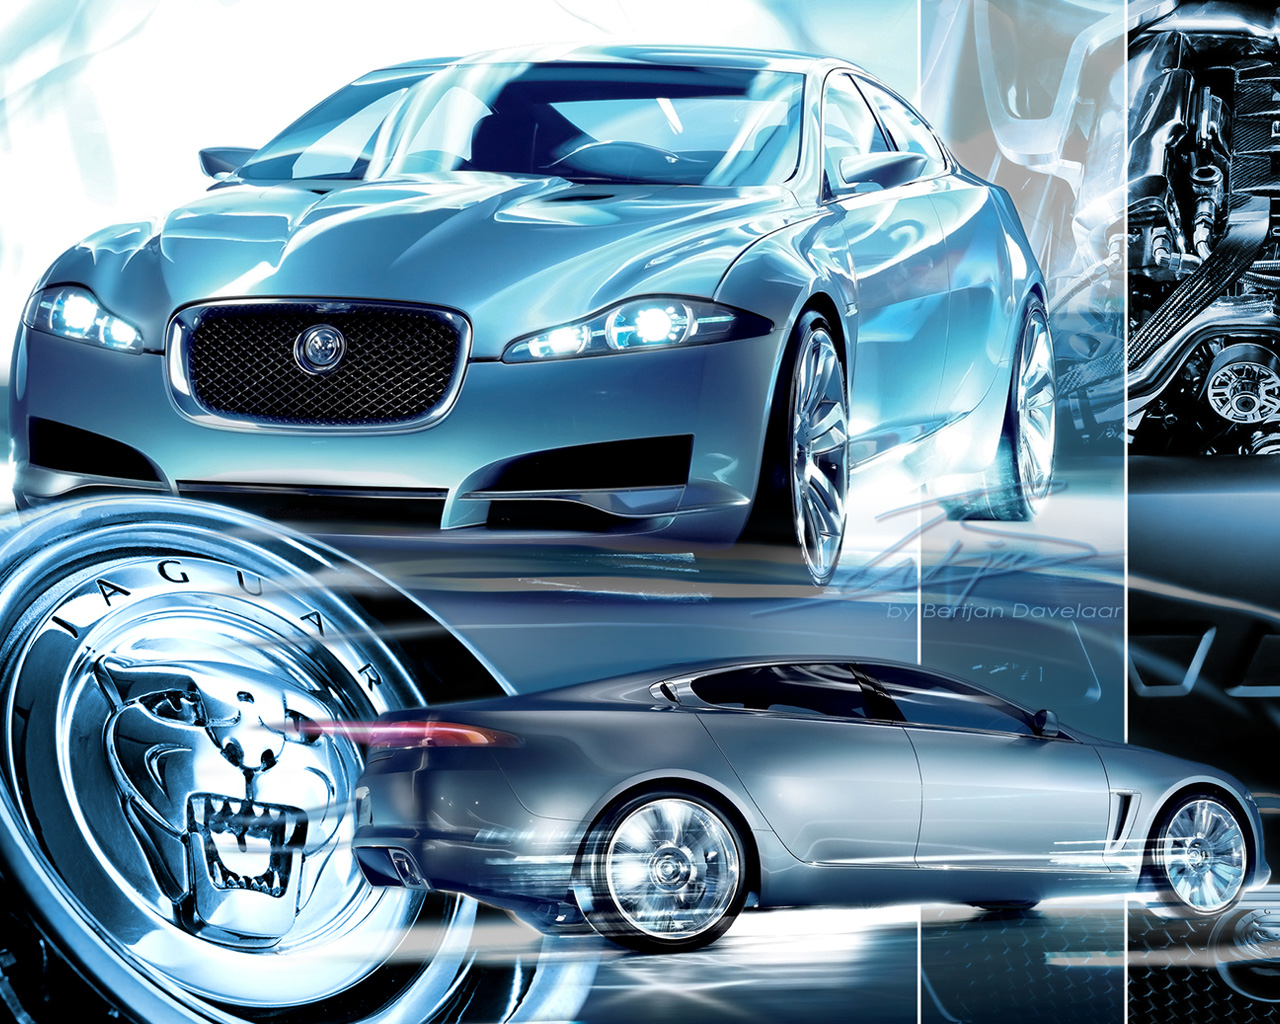 jaguar xf tapete,luxusfahrzeug,fahrzeug,auto,persönliches luxusauto,sportwagen